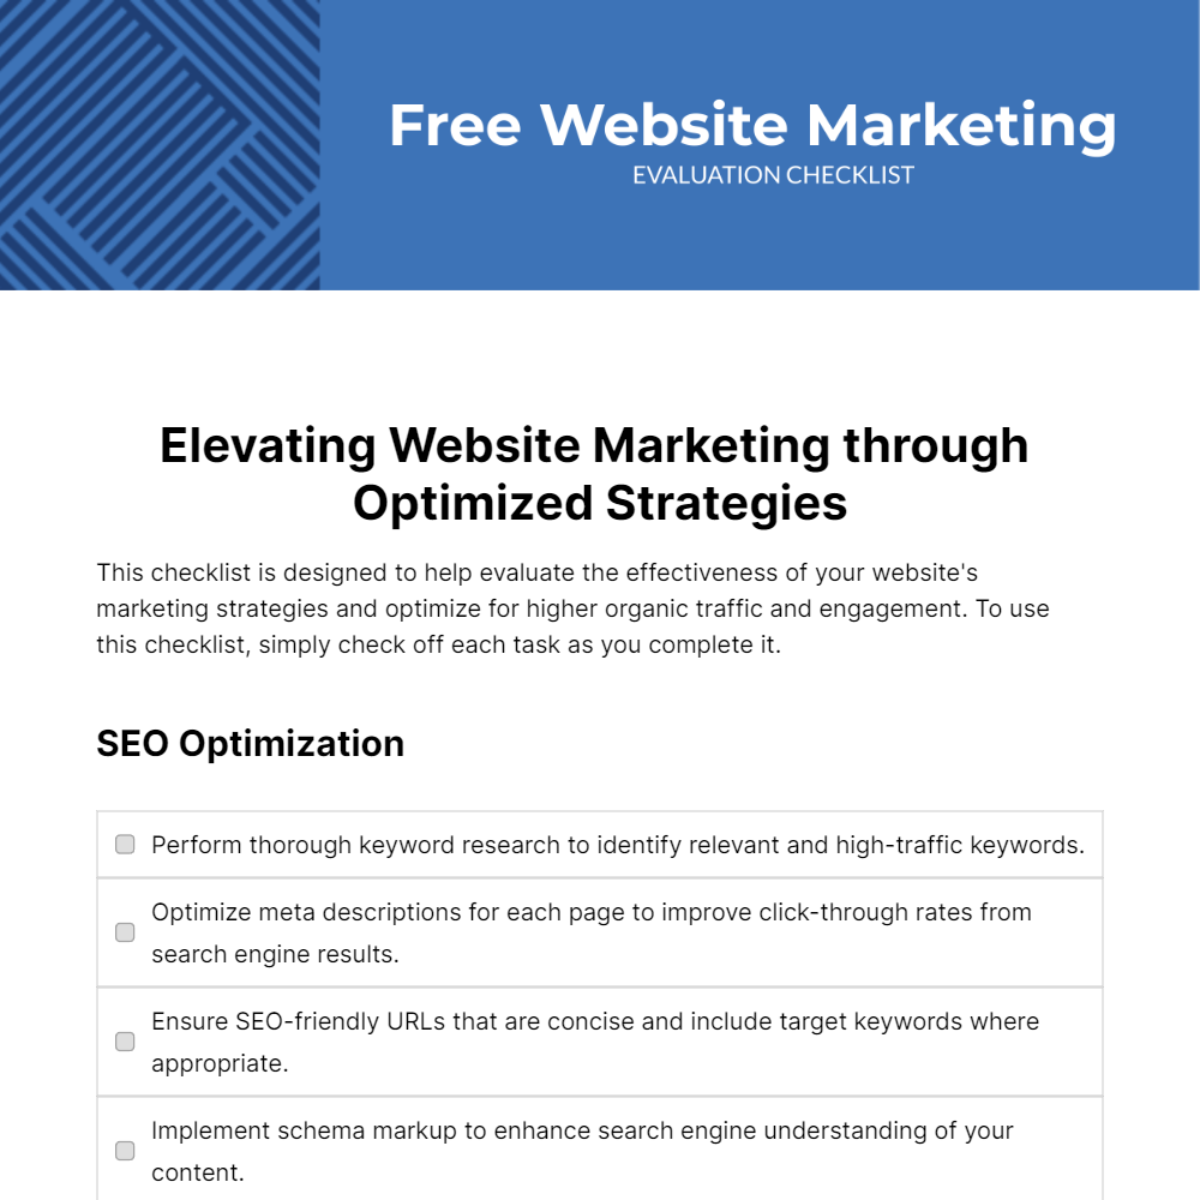 Free Website Marketing Evaluation Checklist Template